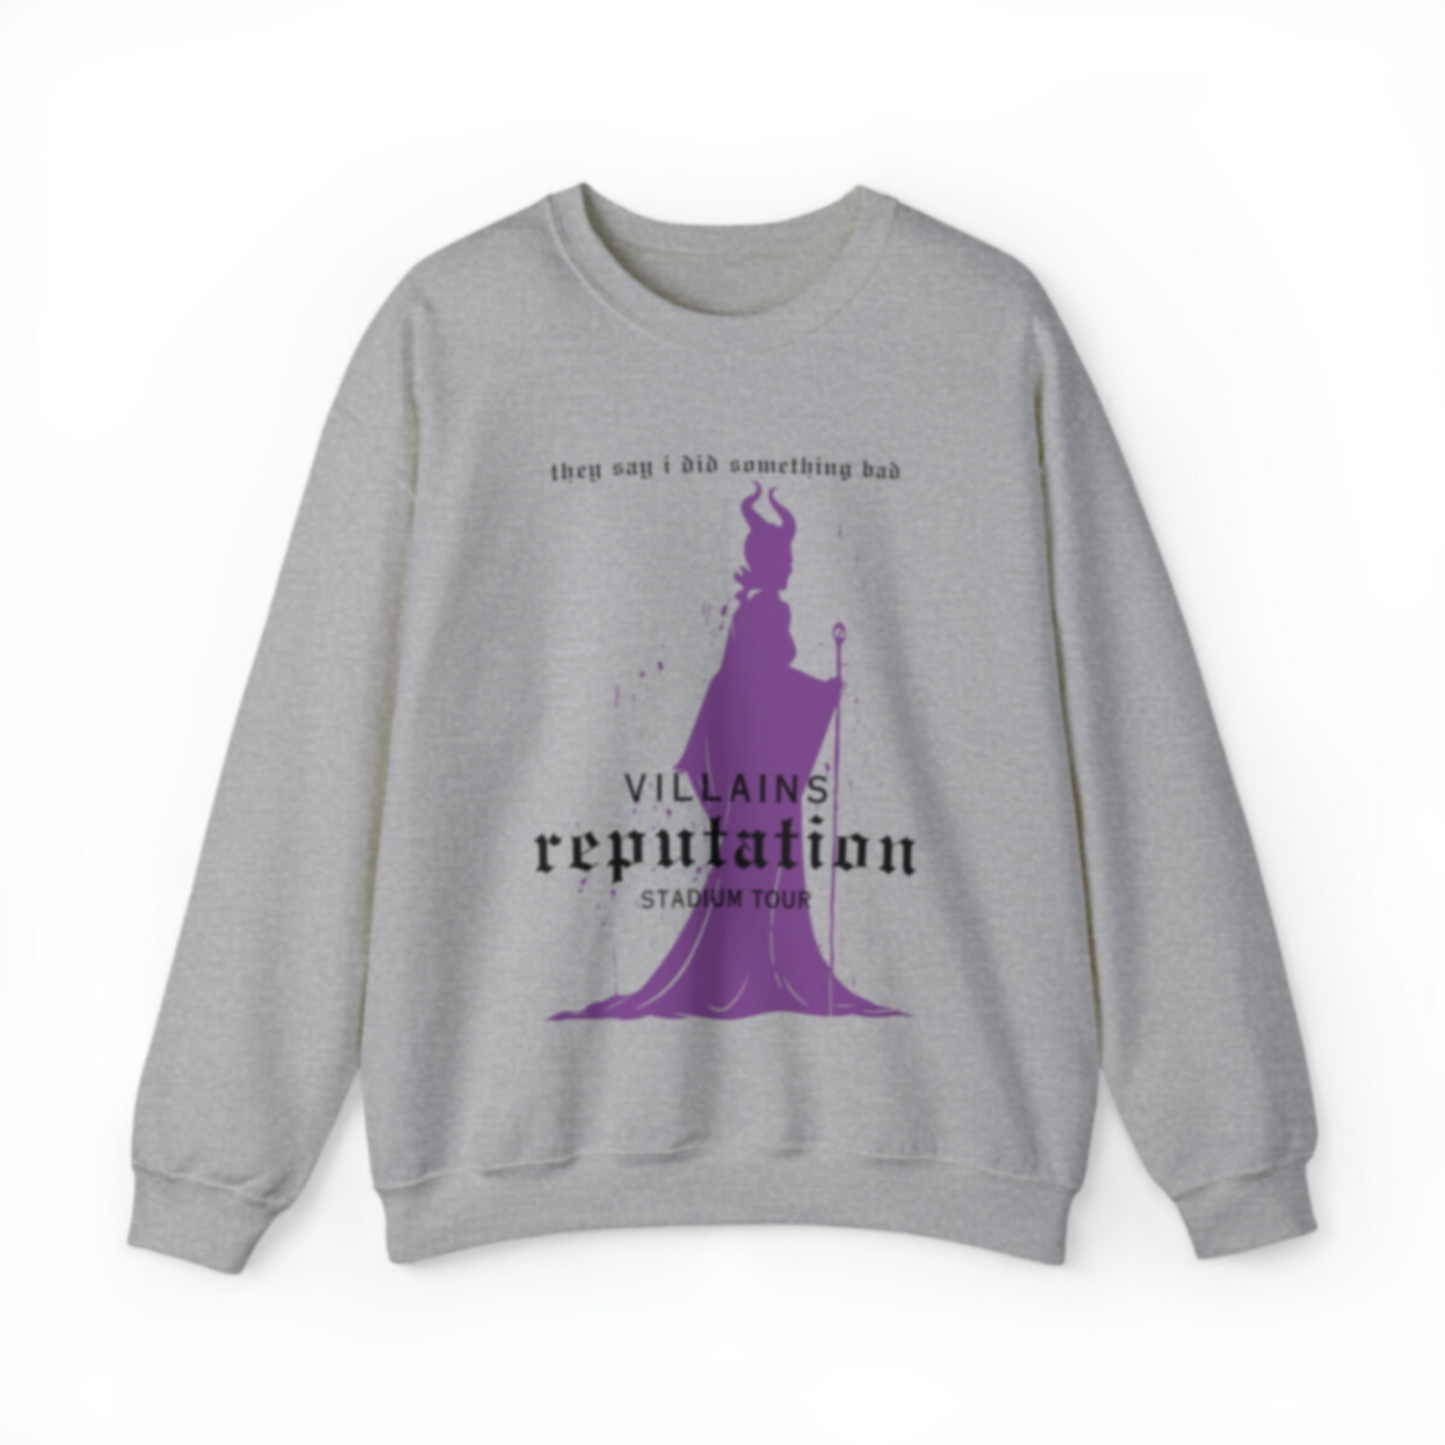 Villains Reputation Tour Sweatshirt | Adult Gildan Unisex